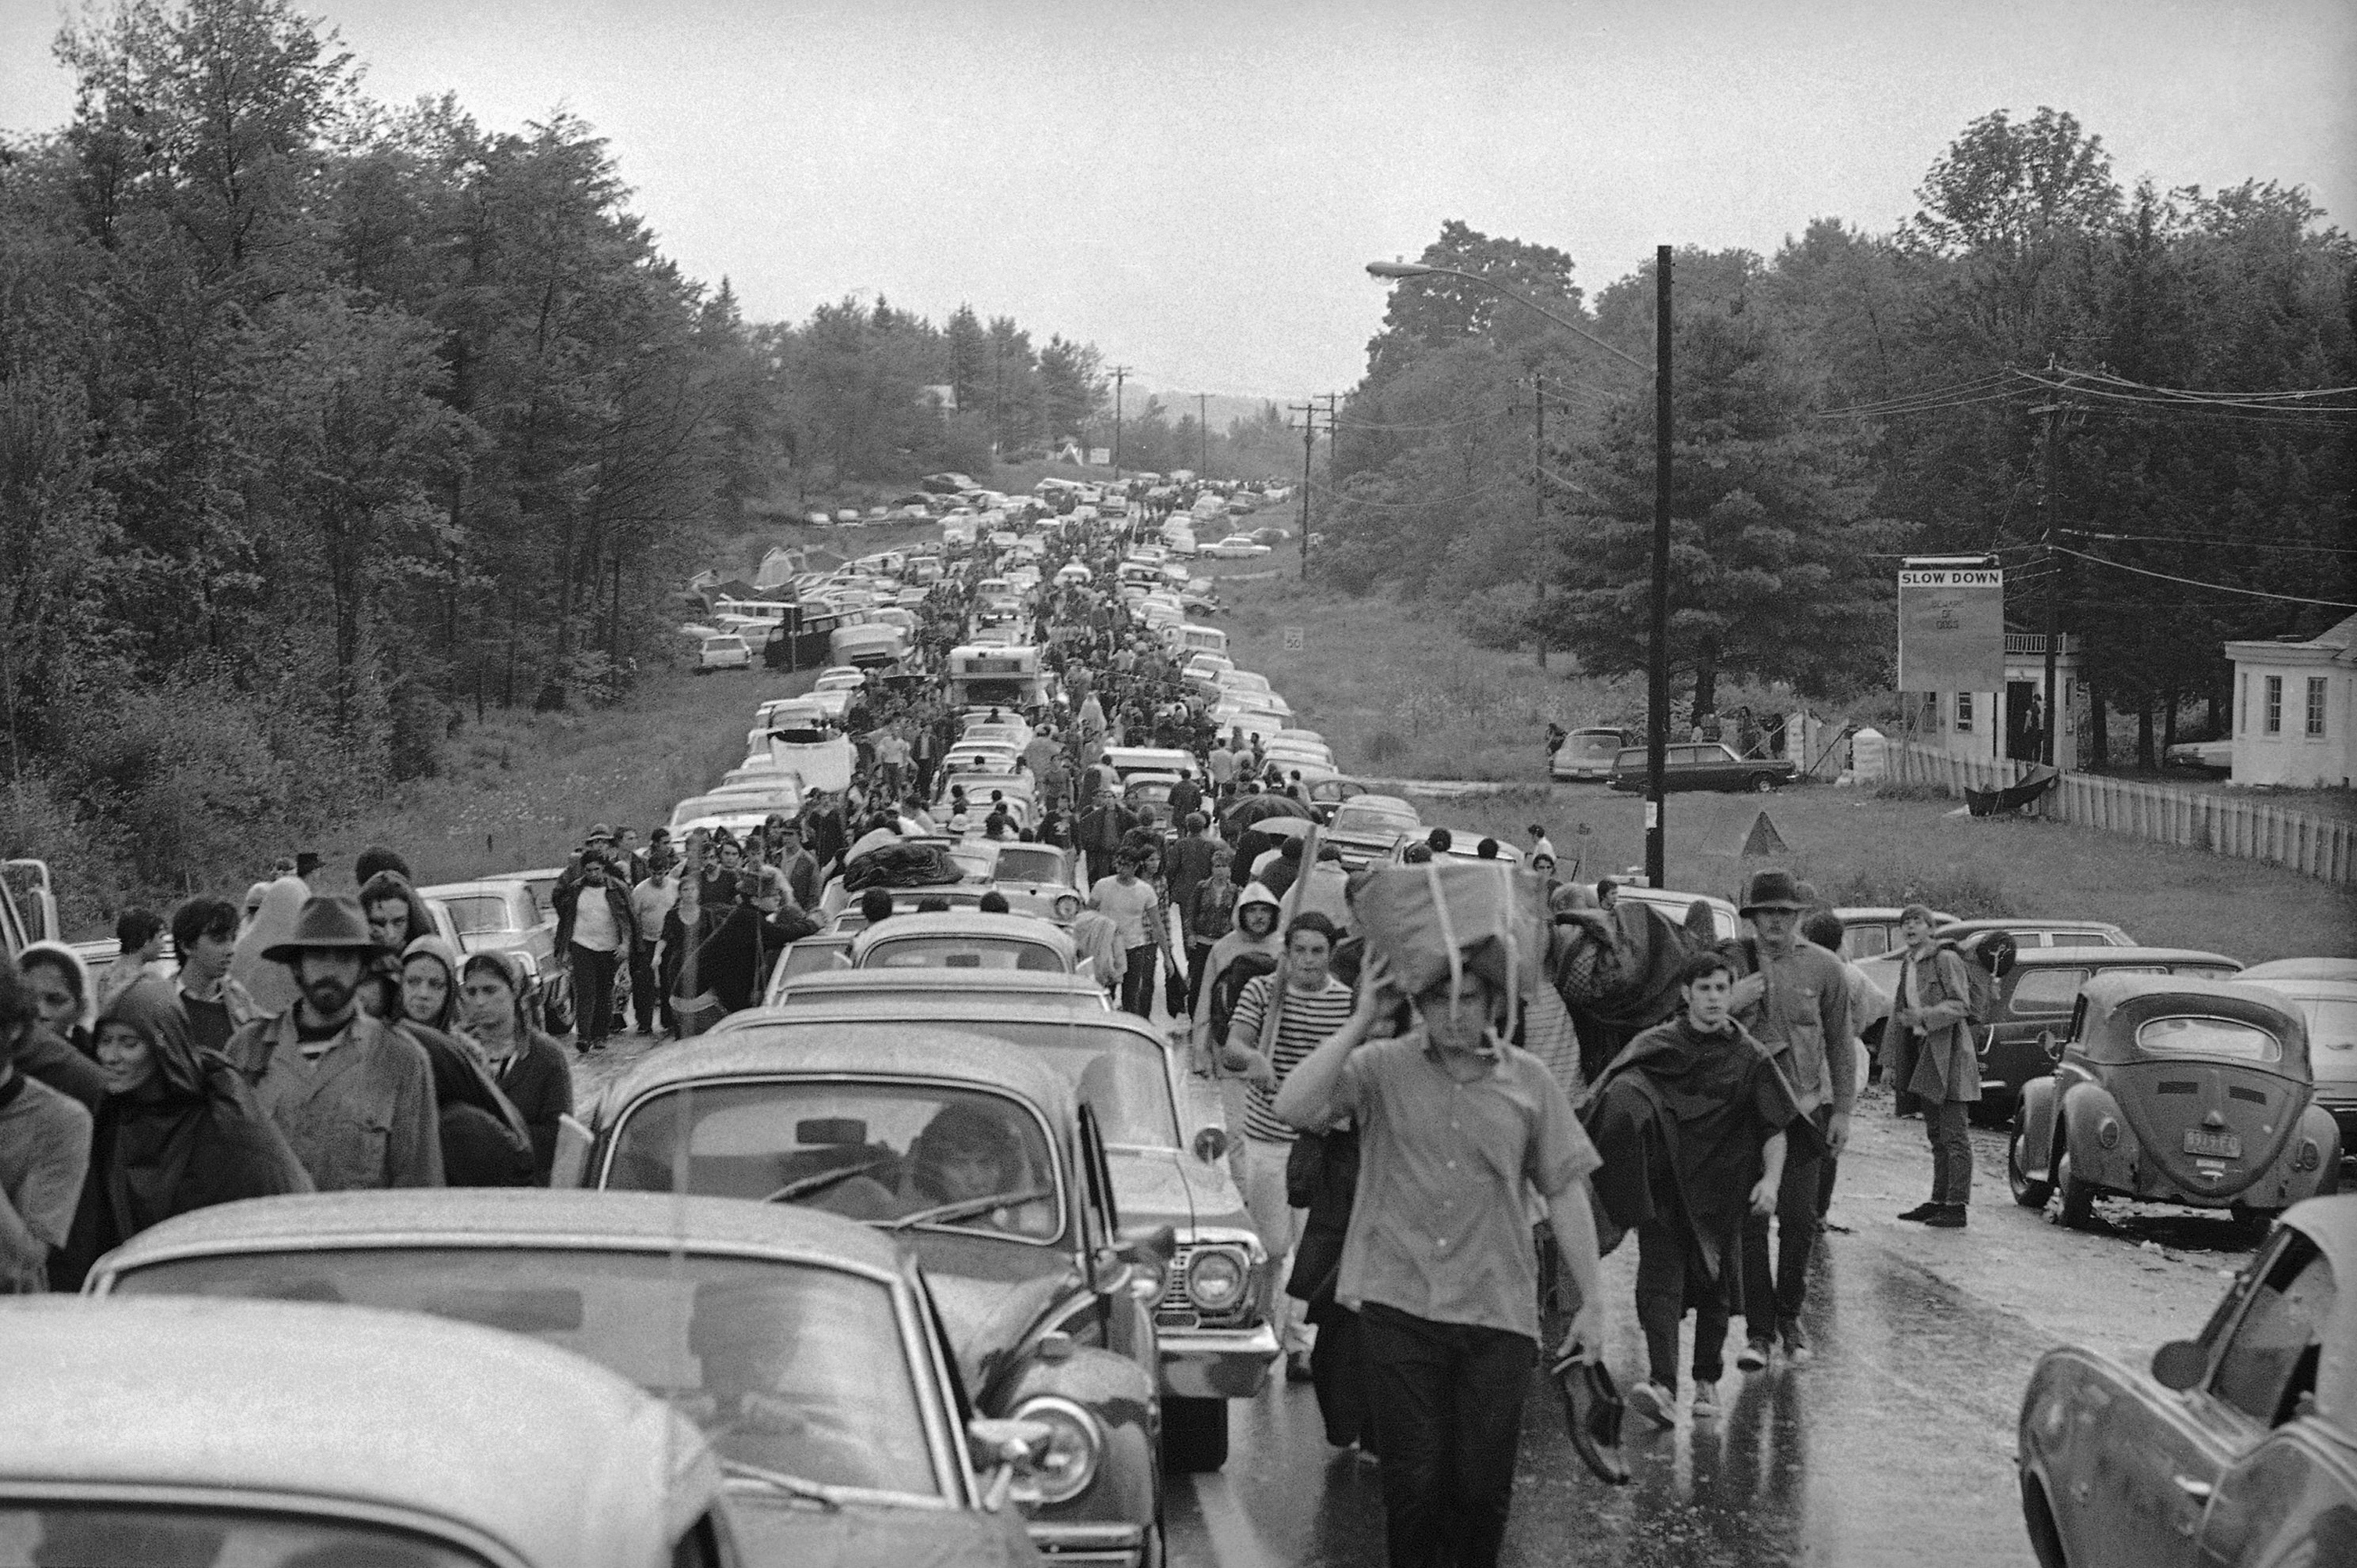 'A waterfall of love': Woodstock memories 50 years later